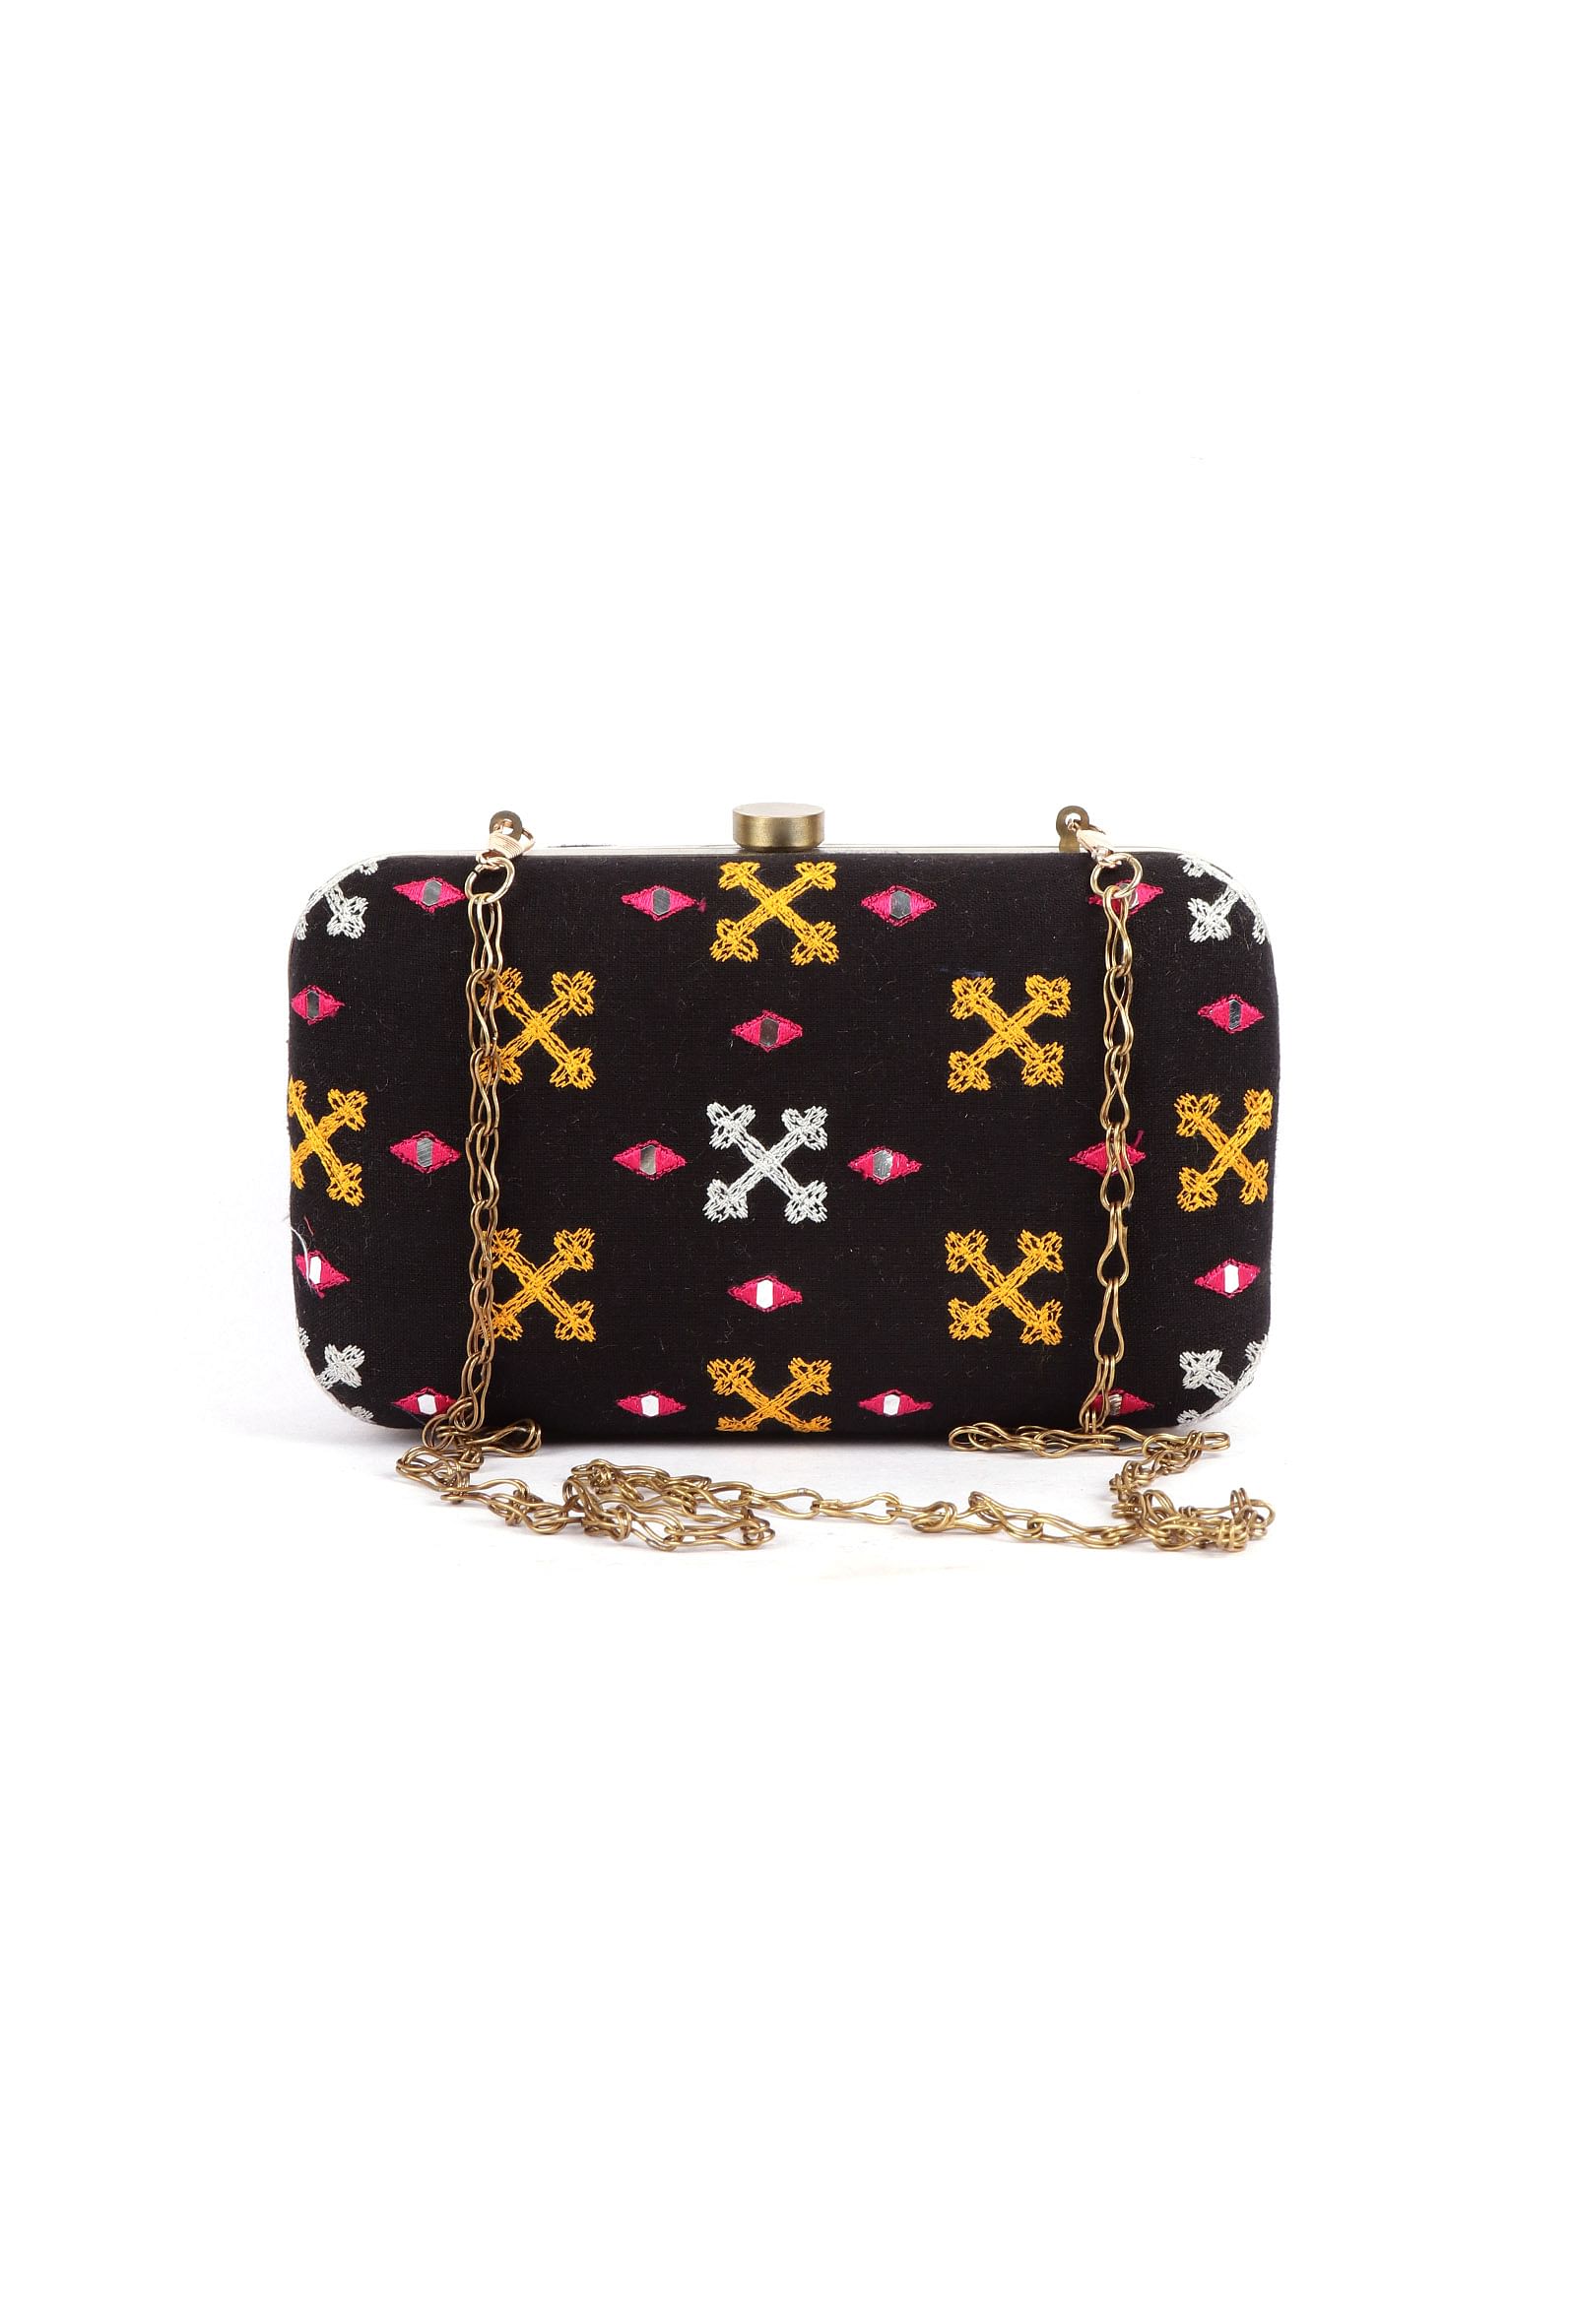 Parisa Black & Multi Kutch Embroidered Rectangular Box Clutch